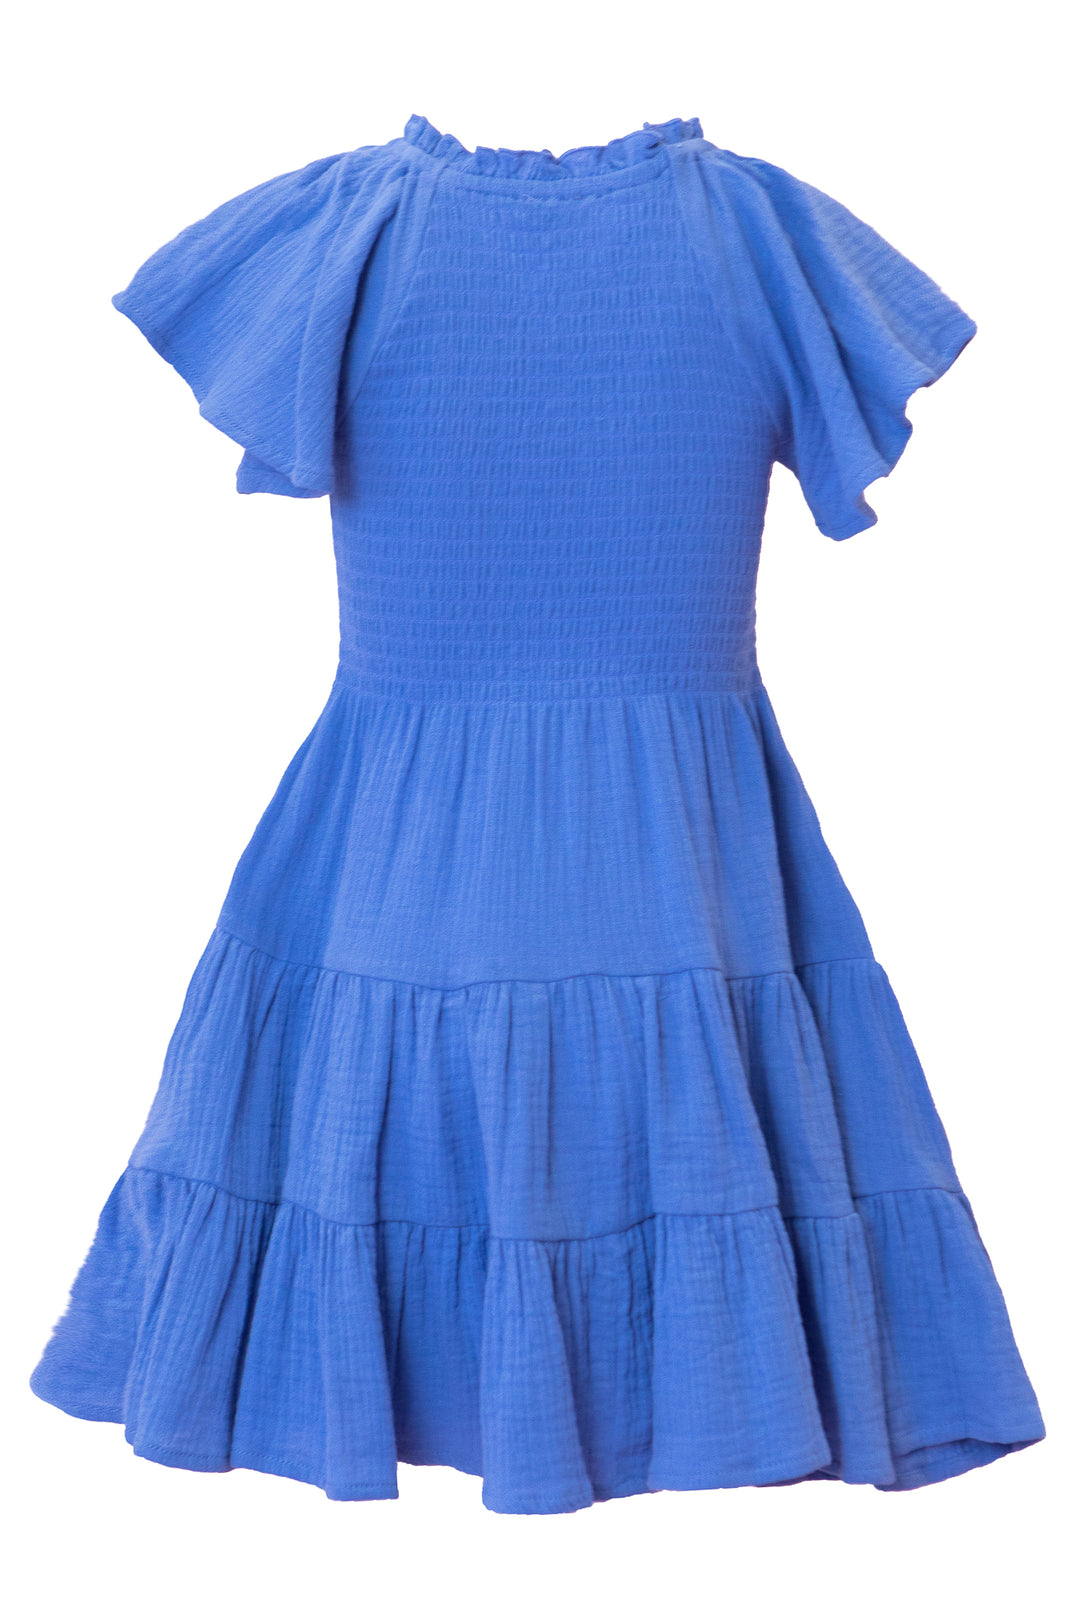 Mini Jovie Dress in Royal Blue